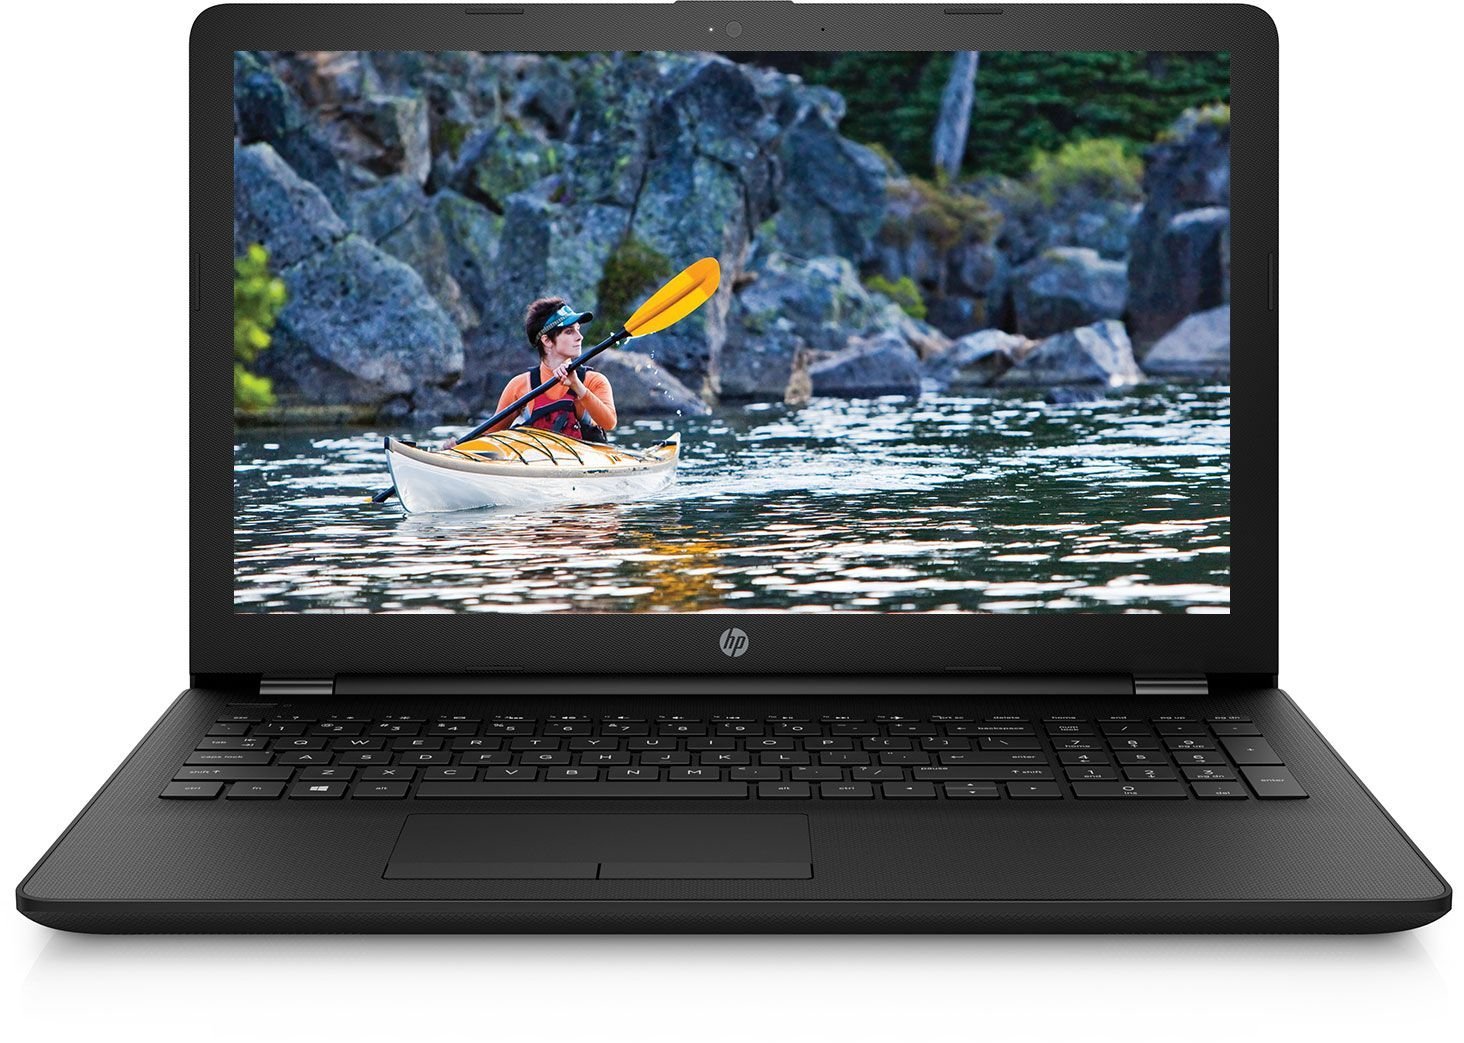 HP 15-BS545TU 2017 15.6-inch Laptop (Intel Pentium N3710/4GB/1TB/DOS/Integrated Graphics), Jet Black